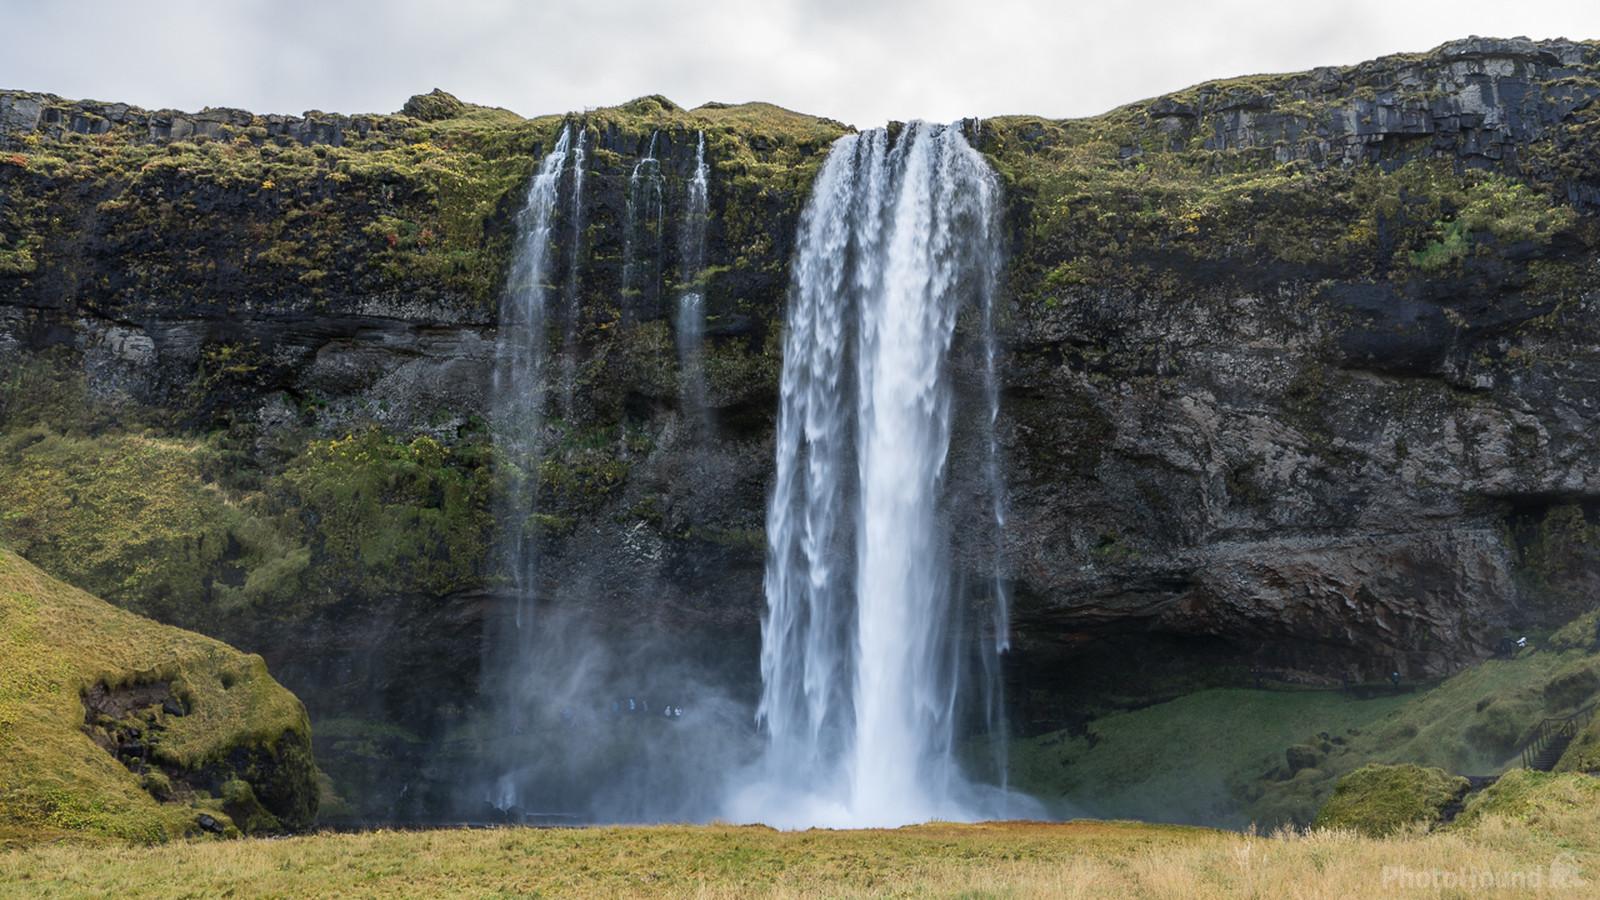 Image of Seljalandsfoss - walk behind the waterfall by James Billings.